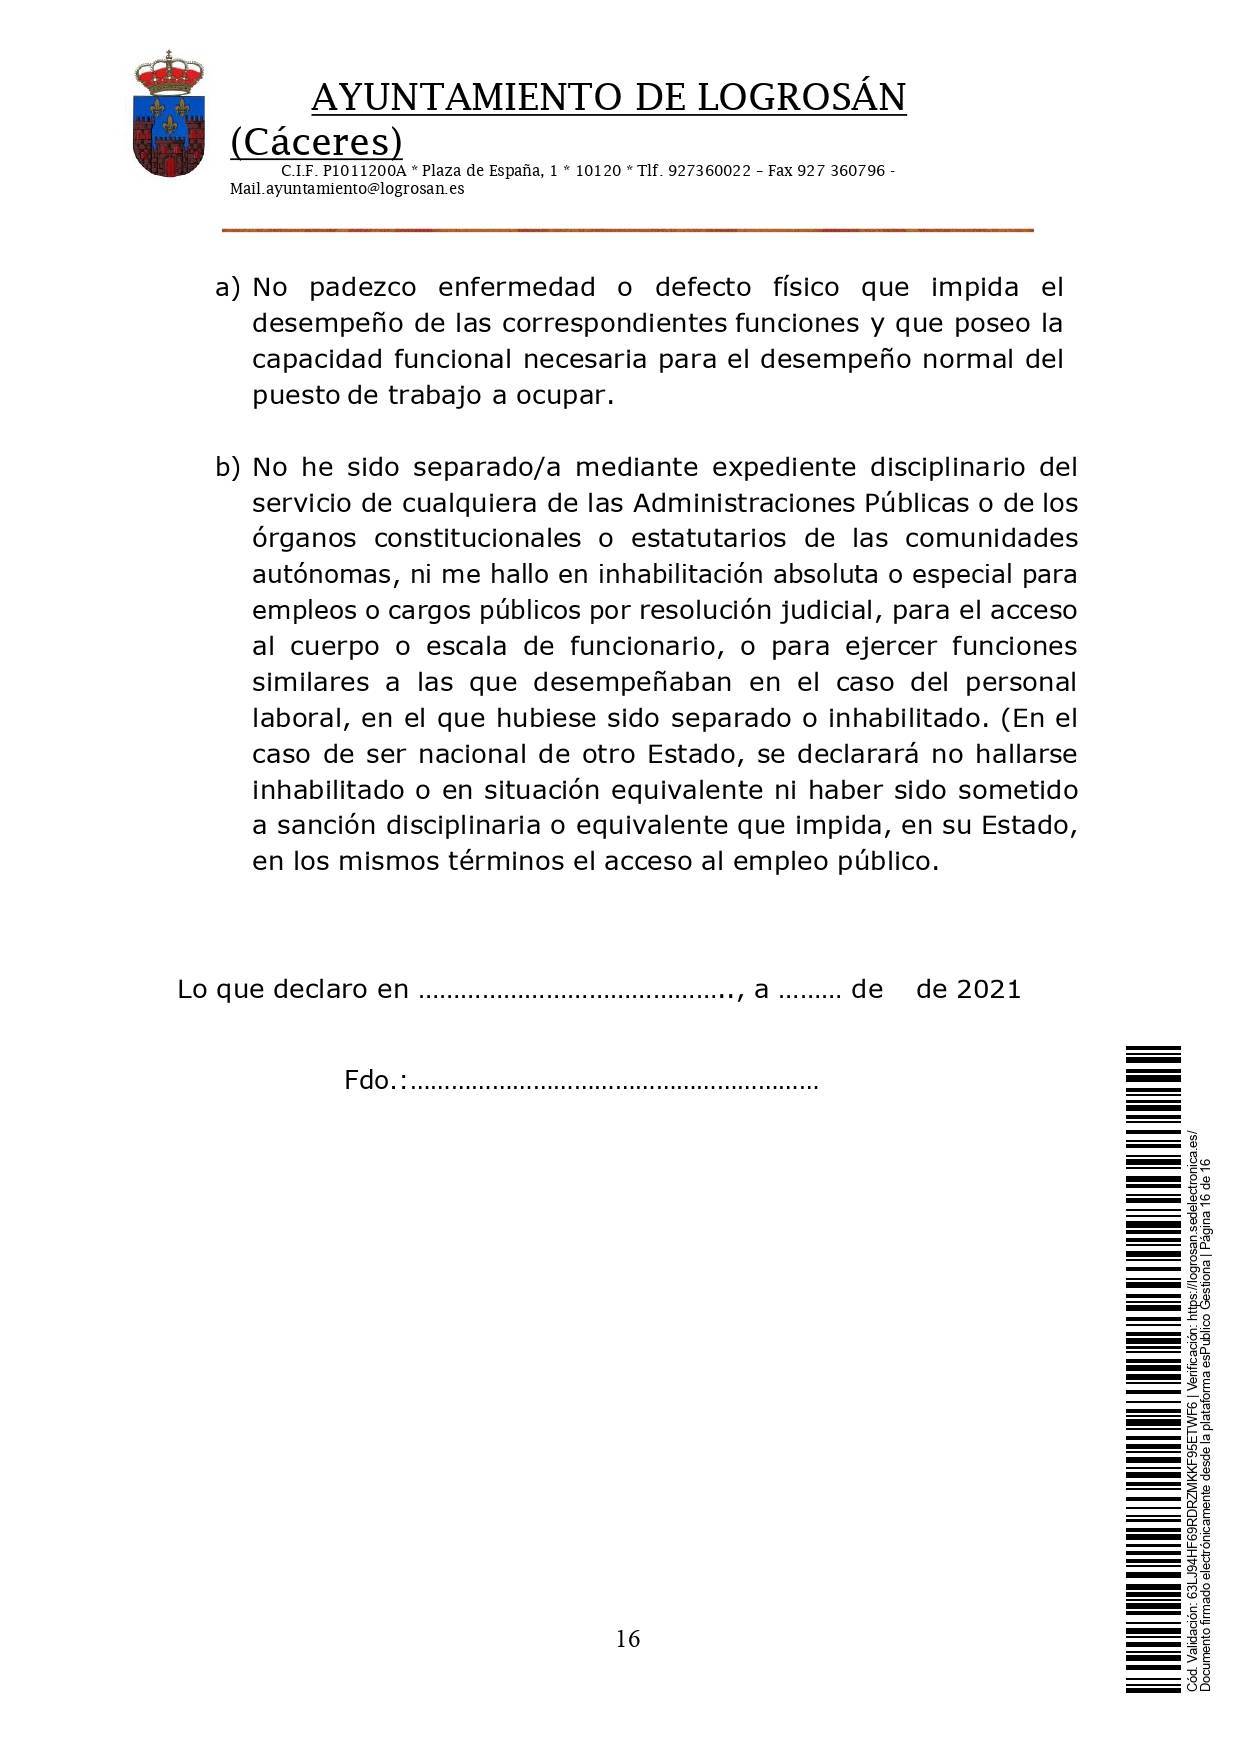 Técnicos-as auxiliar de biblioteca y dinamizador-a cultural (2021) - Logrosán (Cáceres) 16